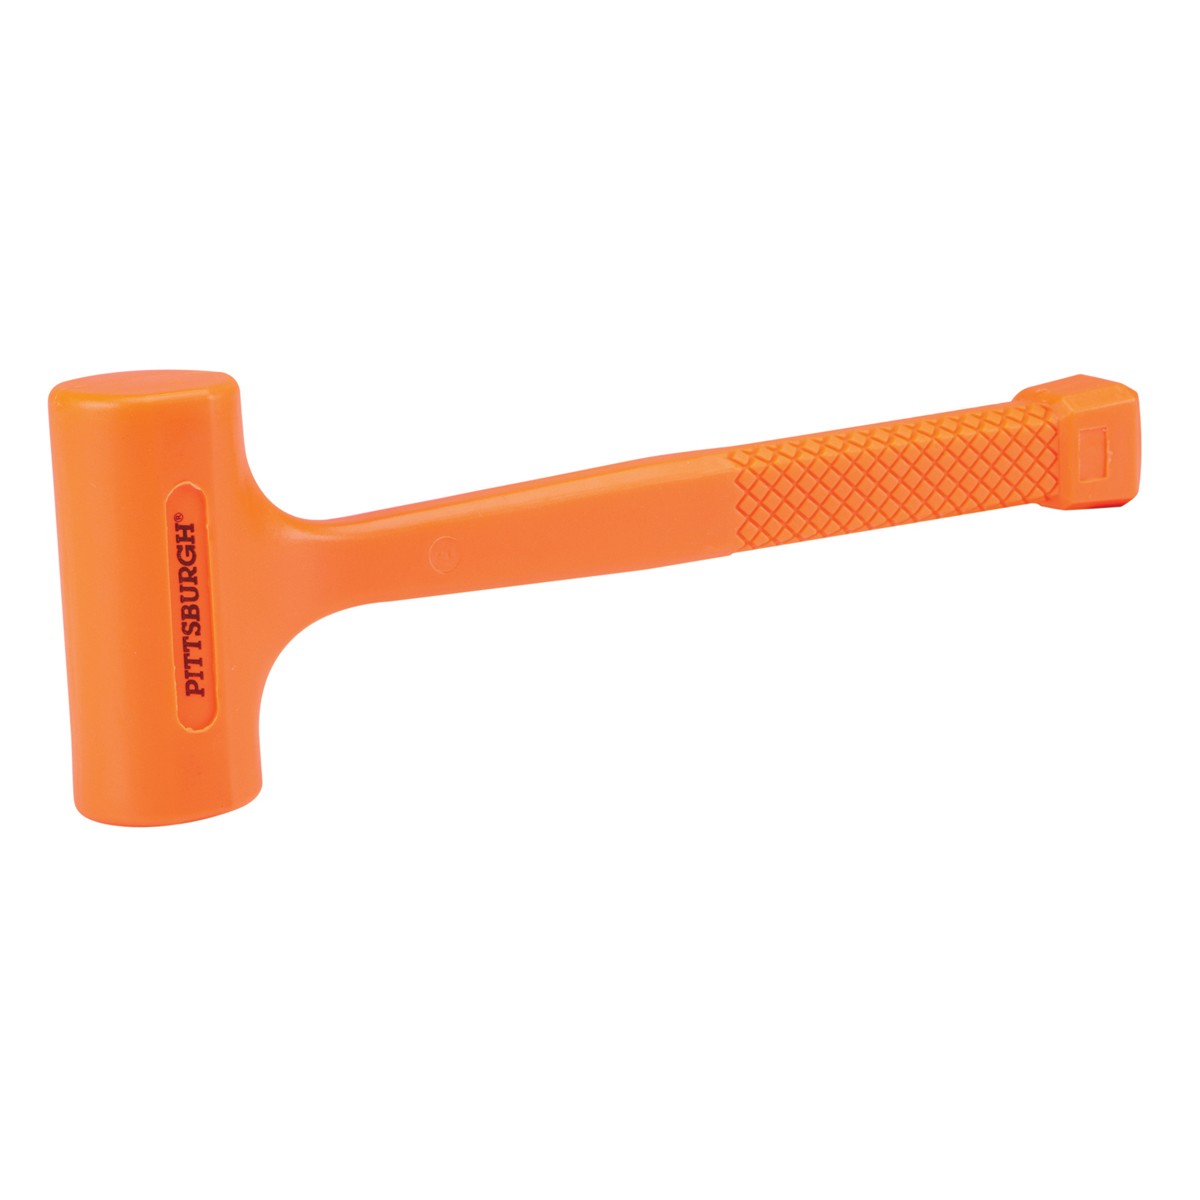 New   Pittsburgh  1 lb. Neon Orange Dead Blow Hammer